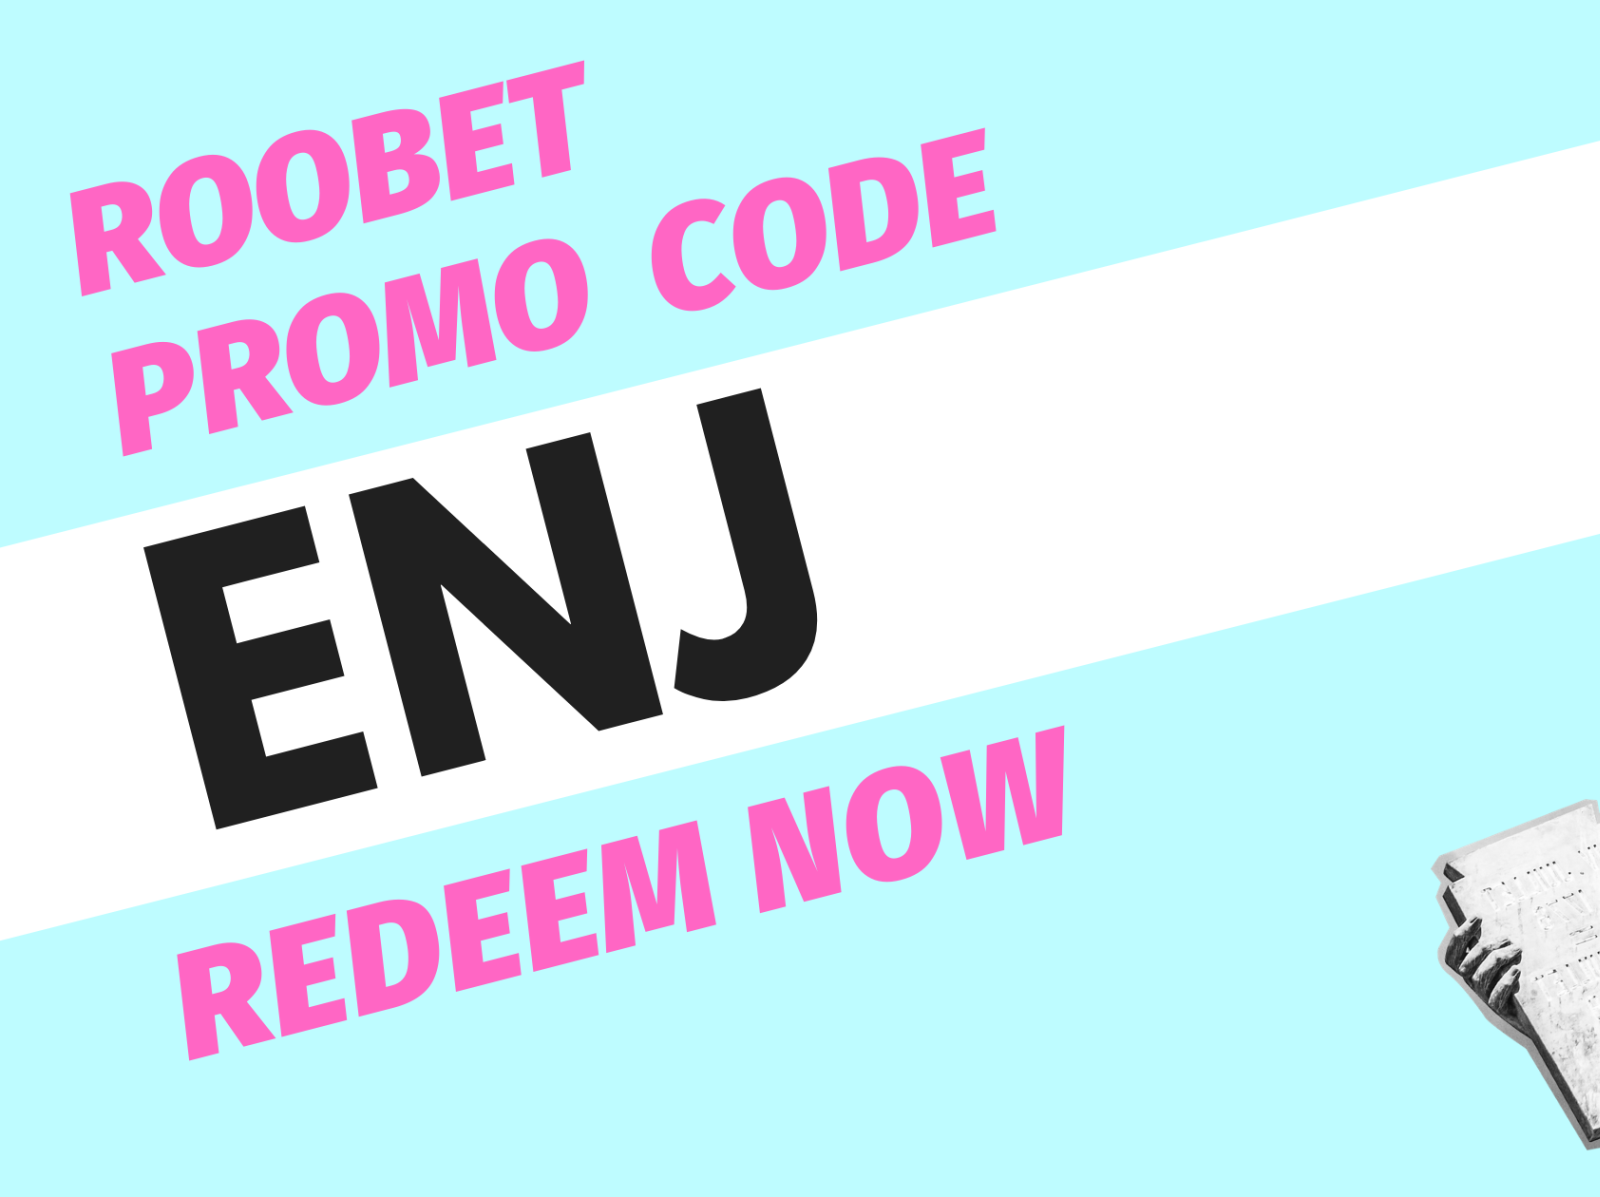 roobet promo codes